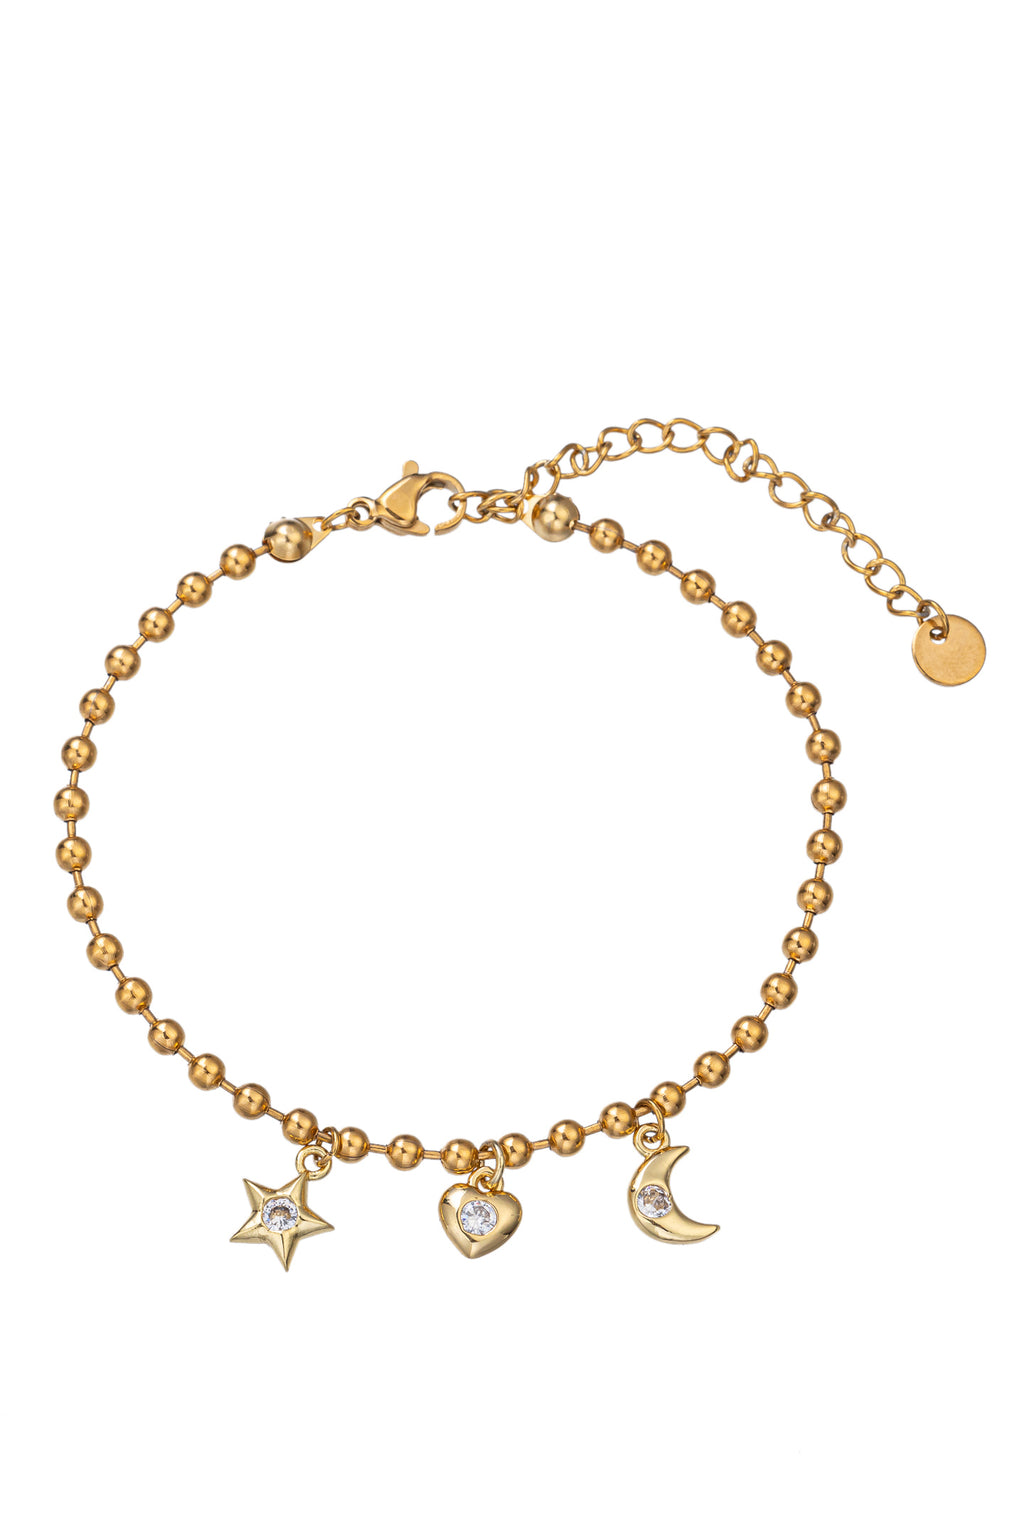 Gold tone titanium beaded bracelet with gold charm pendants.